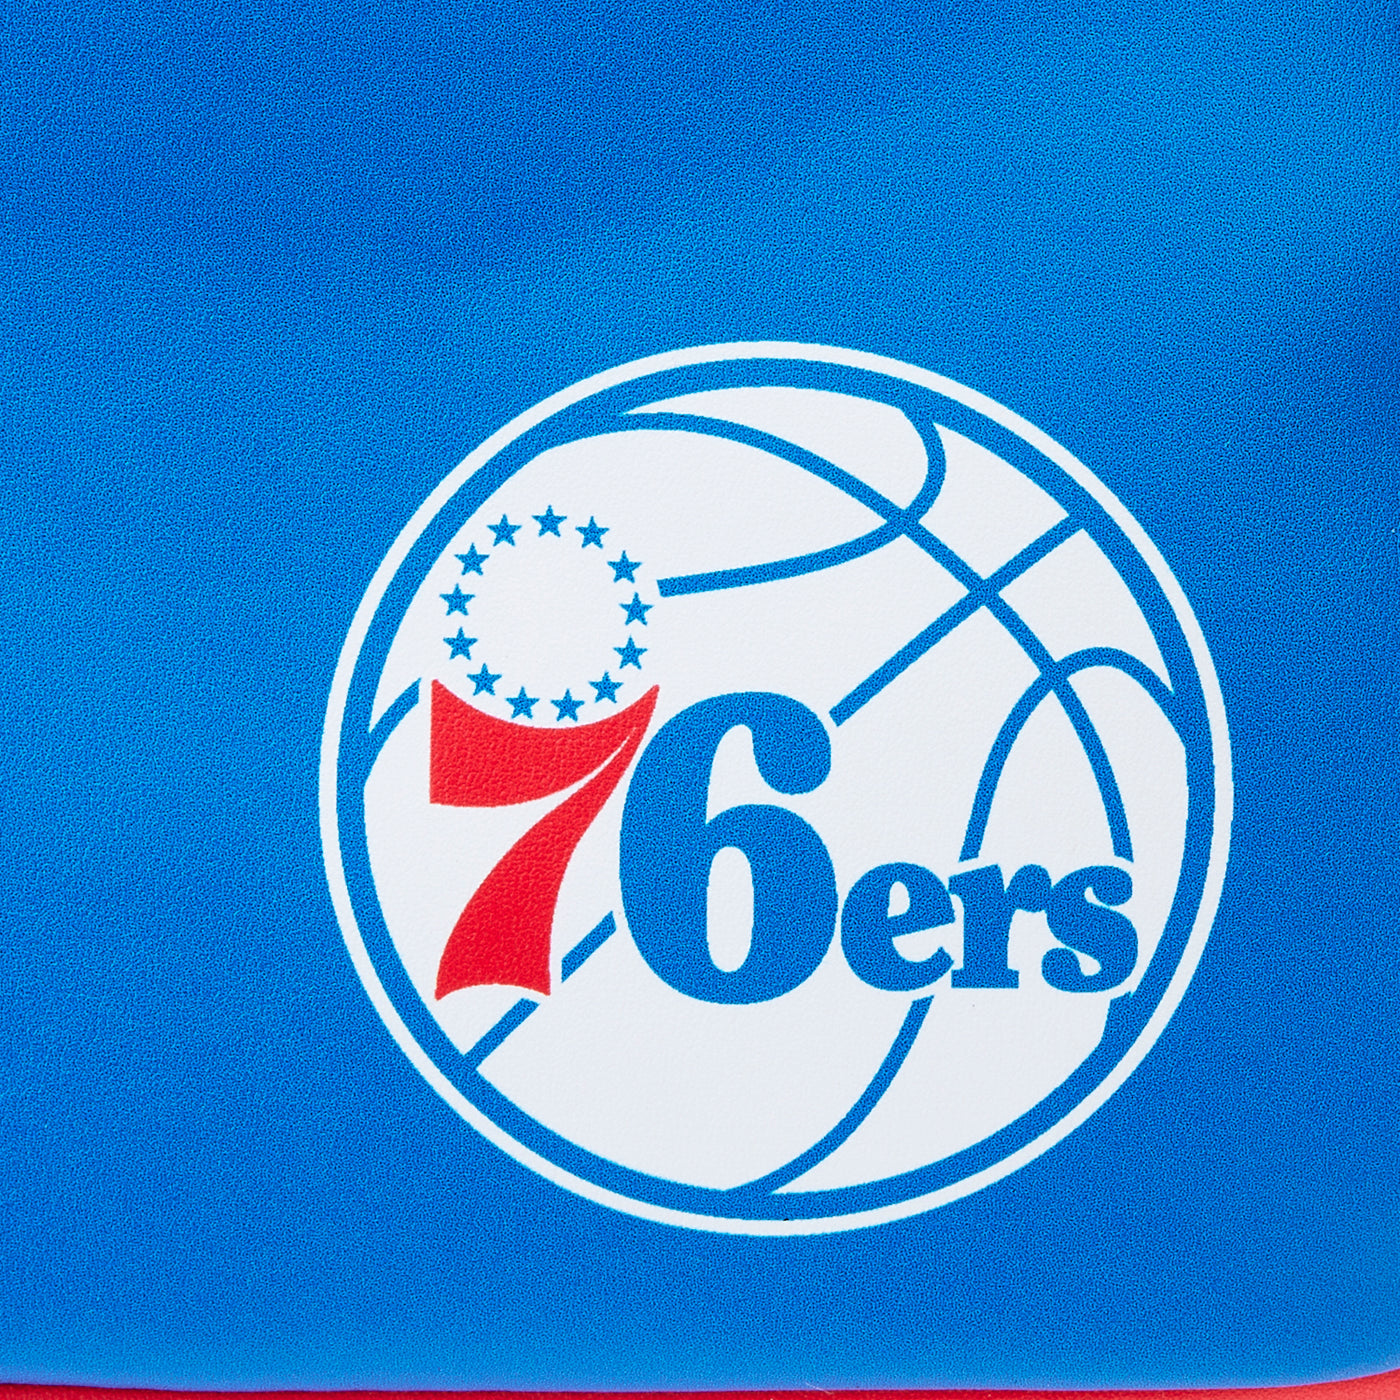 NBA Philadelphia 76ers Patch Icons Mini Backpack